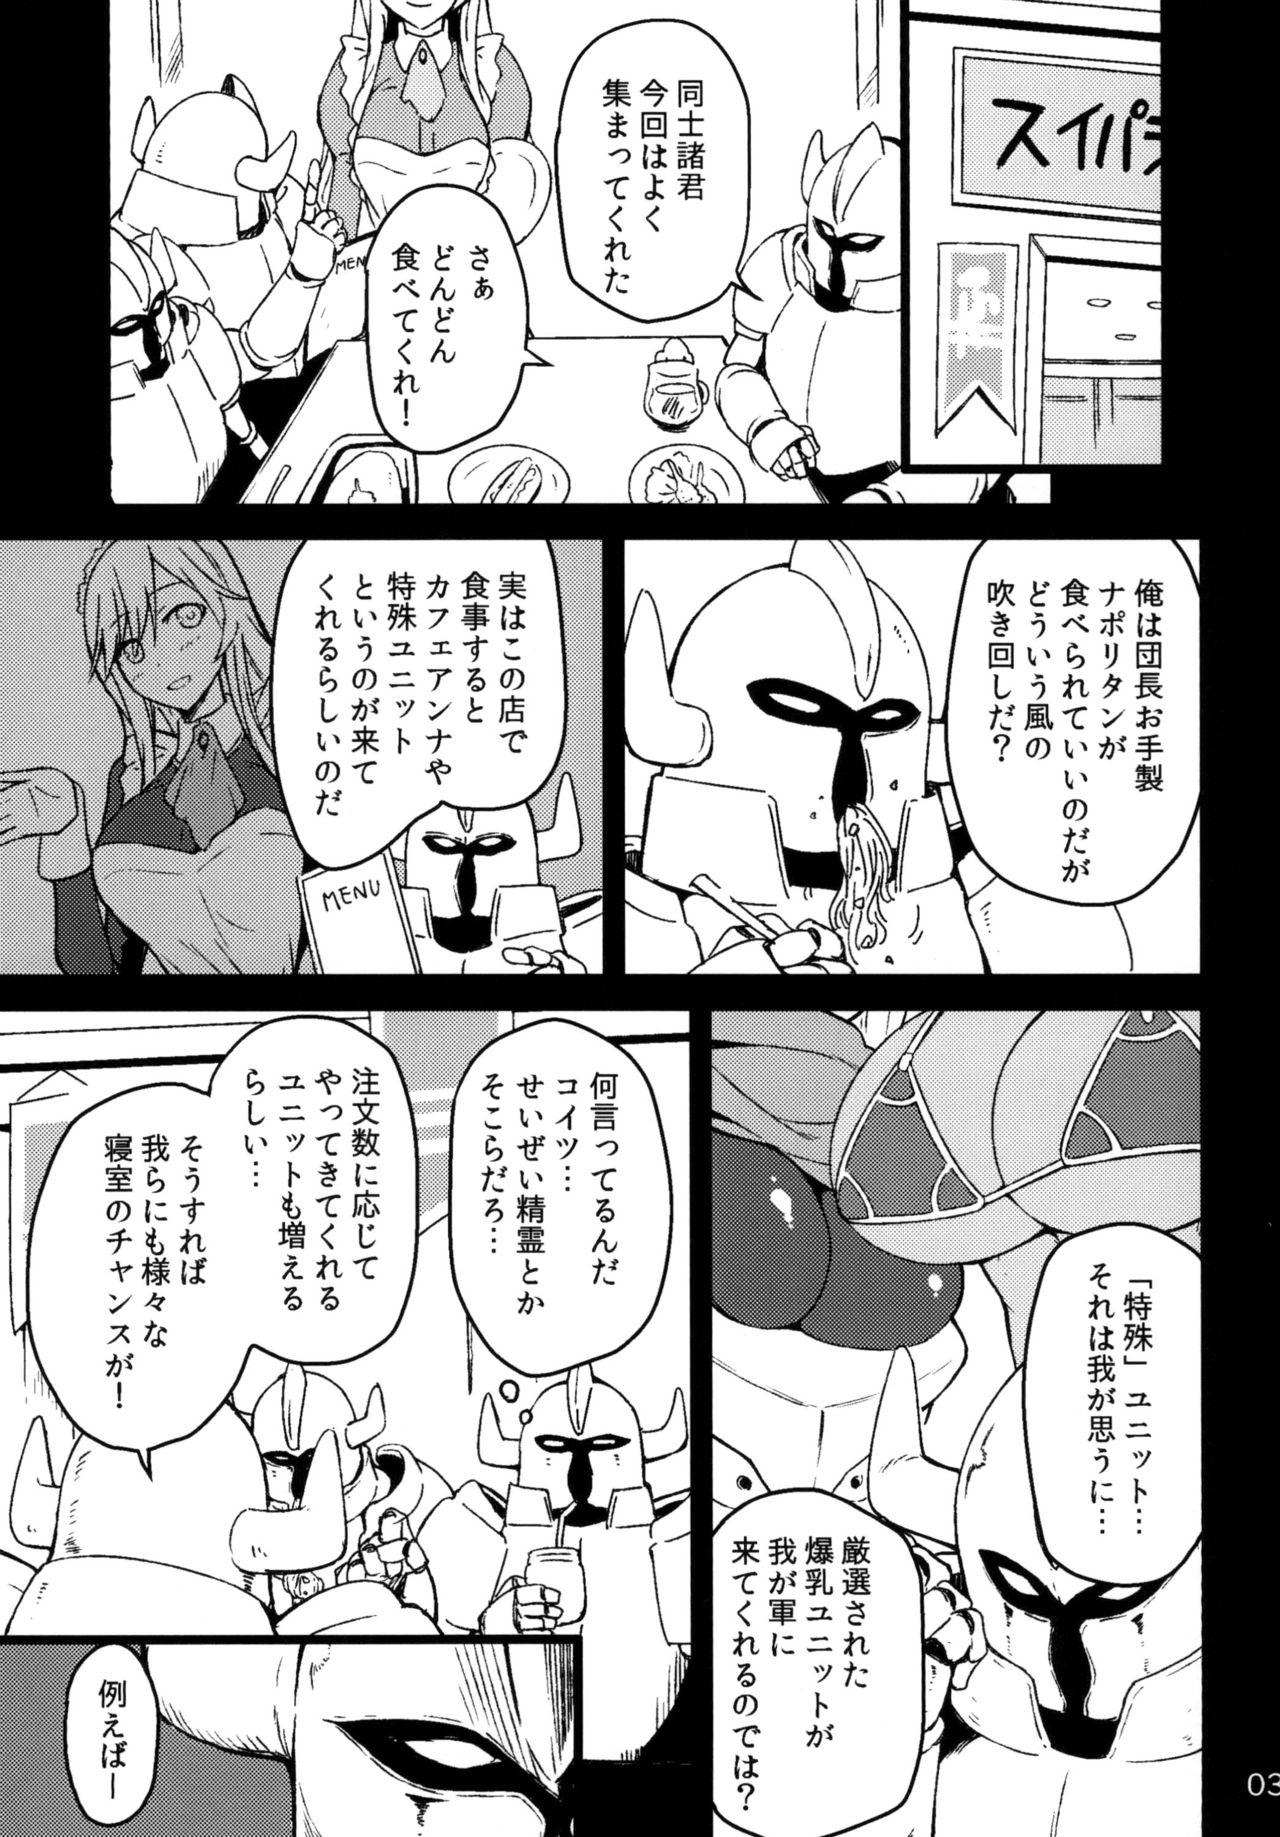 X Ankoku Kishi no Sandan 2 - Sennen sensou aigis Exgirlfriend - Page 3